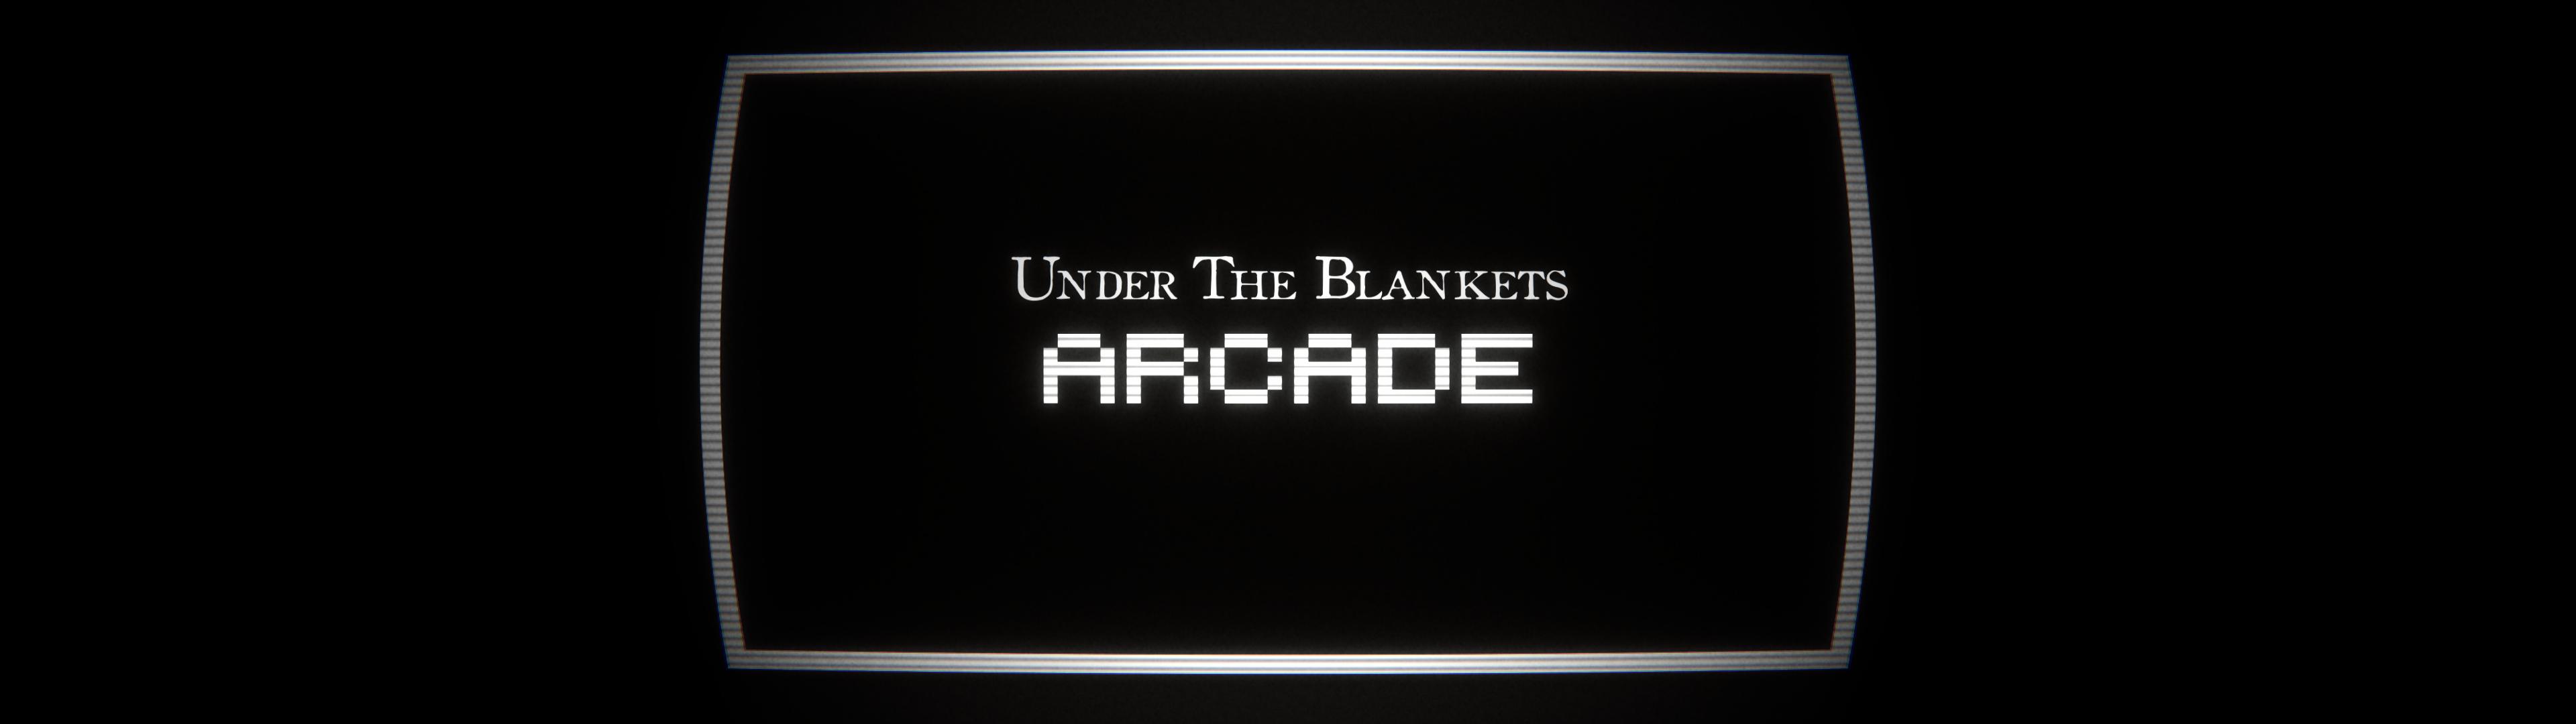 Under The Blankets Arcade (The Inventor)